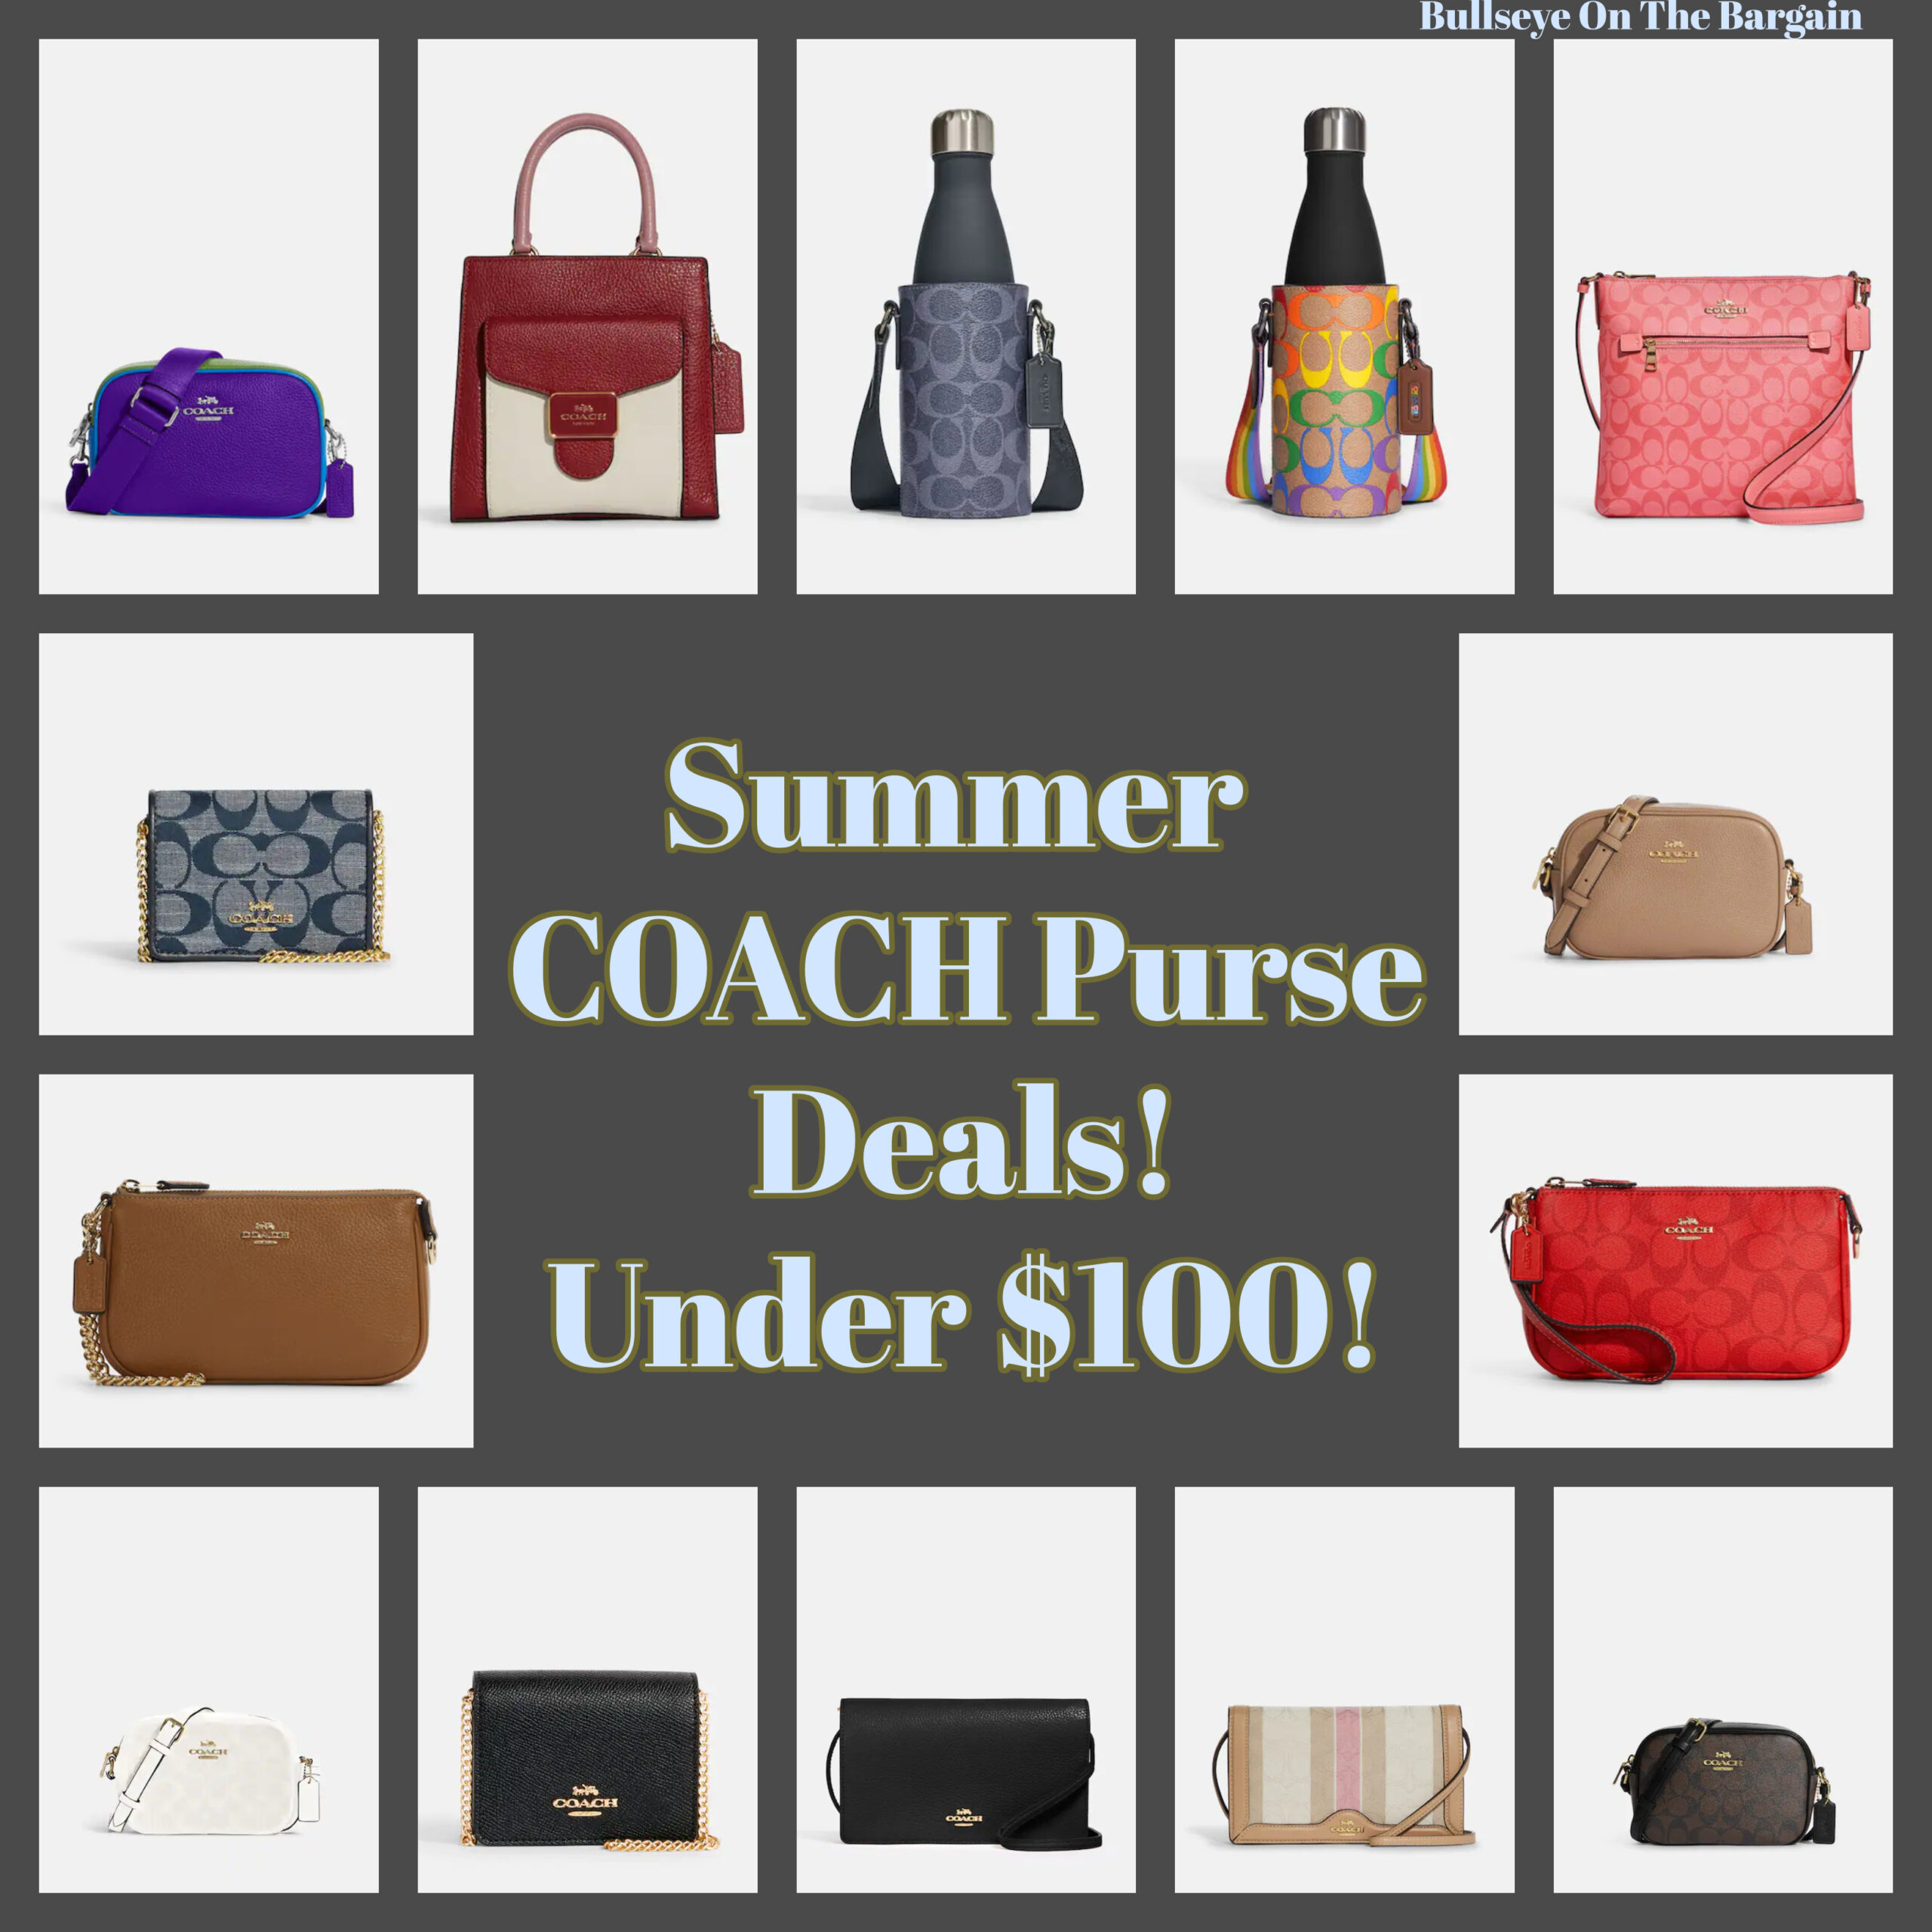 COACH purses under $100!!!!